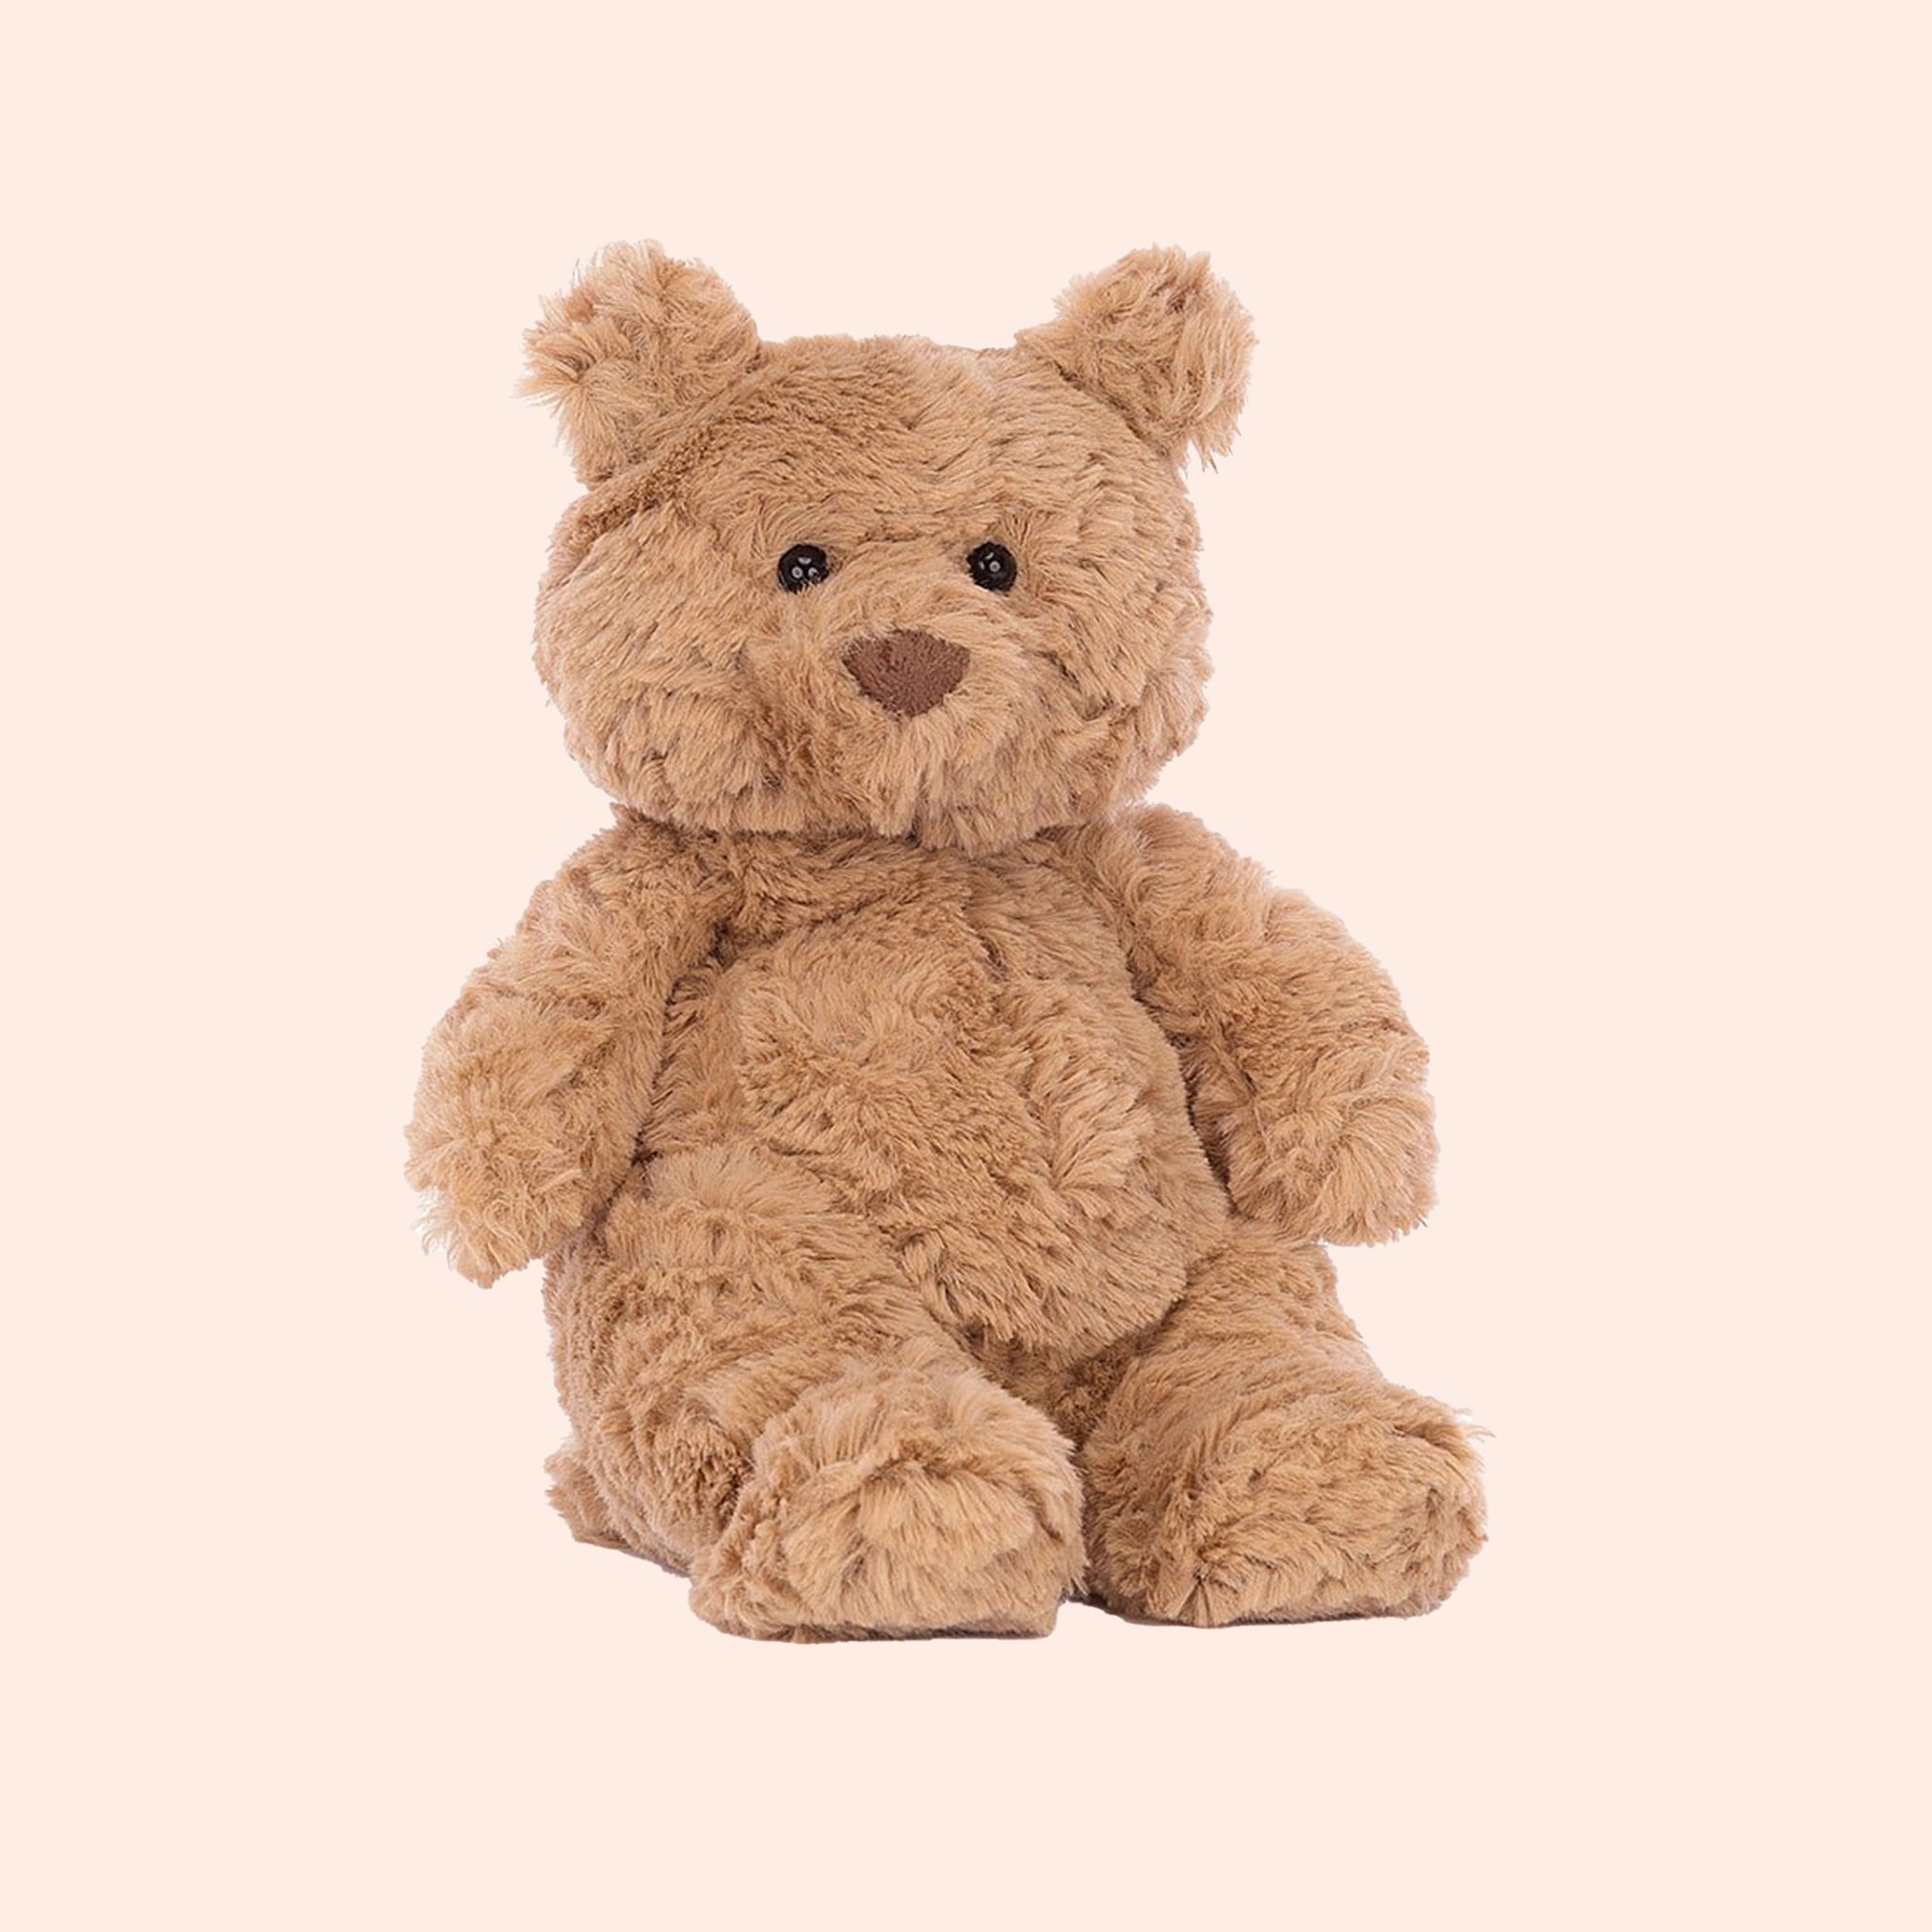 A brown cuddly bear shaped stuffed toy. 